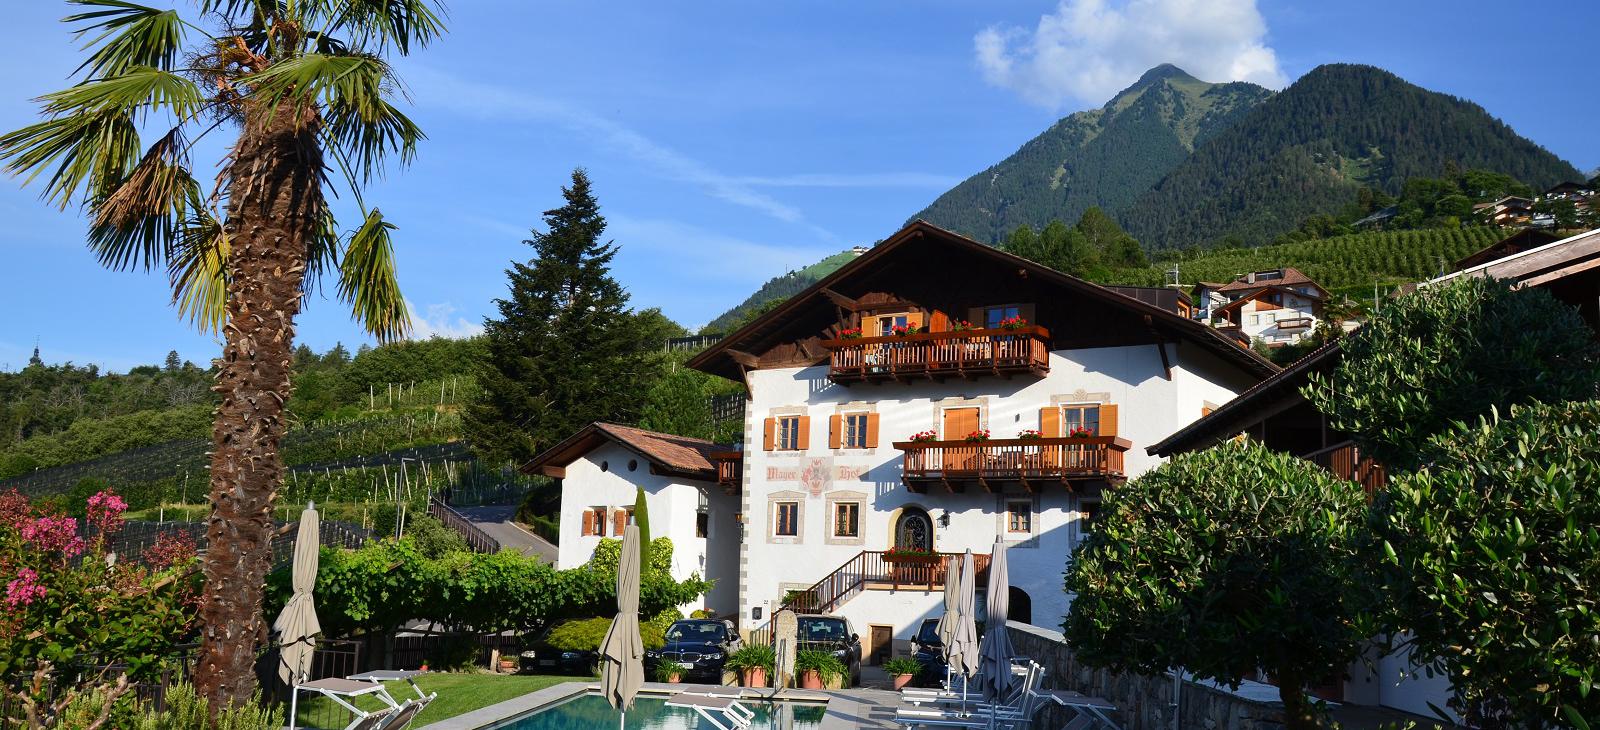 Der Mayerhof in Kuens, Meran, Südtirol